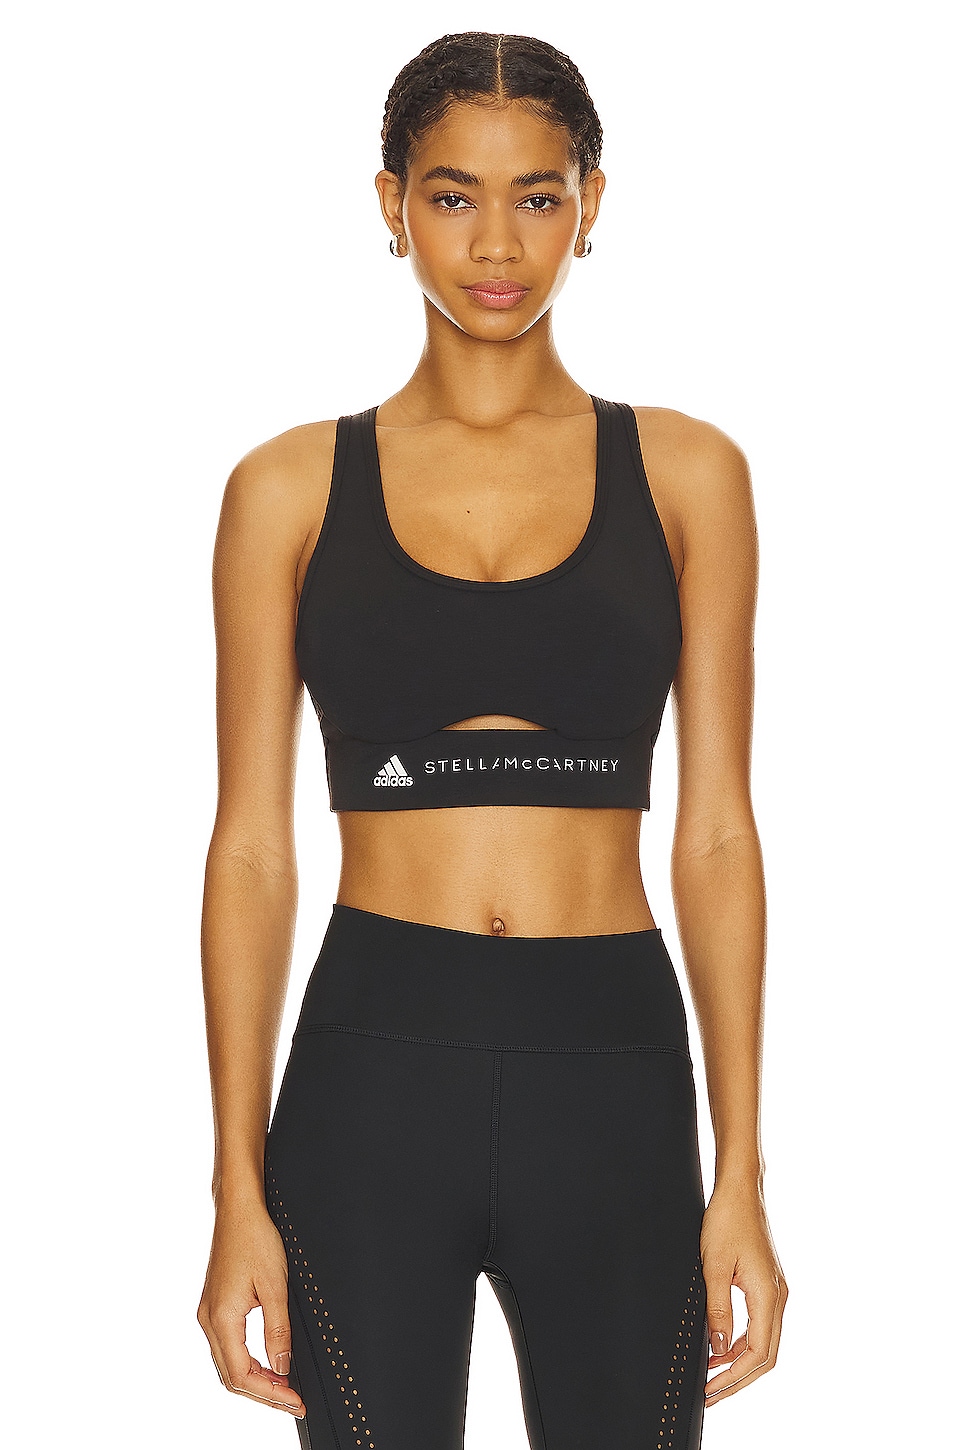 adidas by Stella McCartney Truestrength Yoga Medium Support Sports Bra in  Black & White